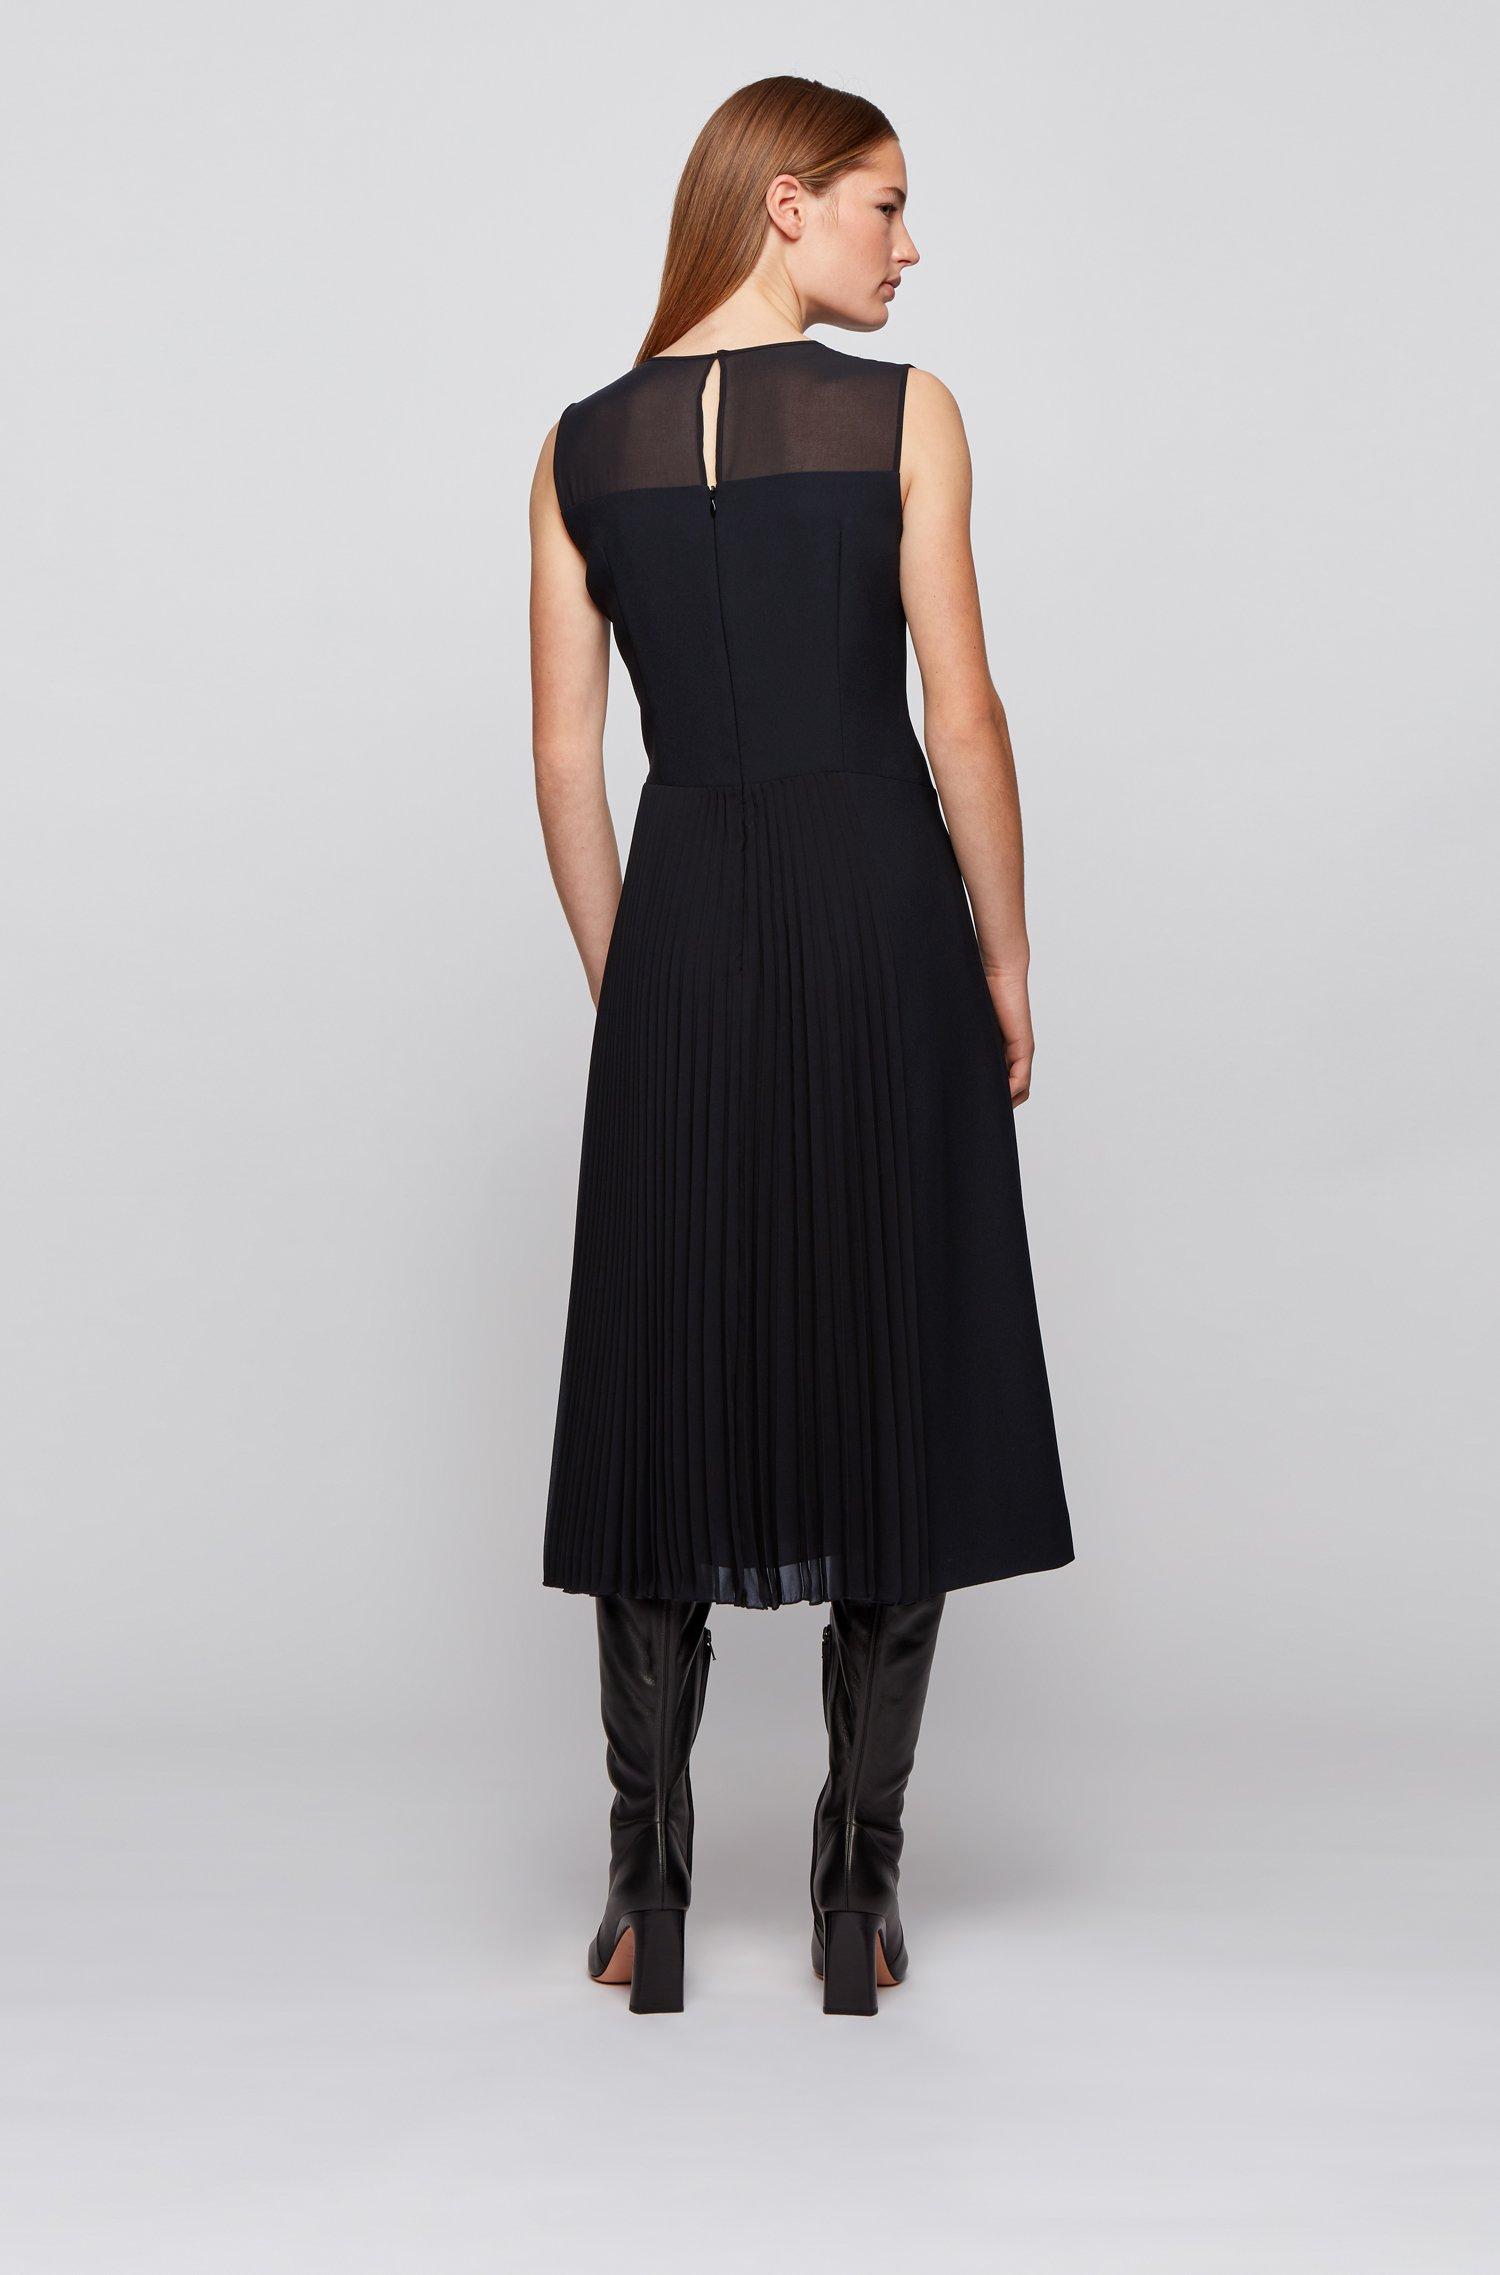 BOSS by HUGO BOSS Sleeveless Crepe Dress With Plissé Pleats in Black